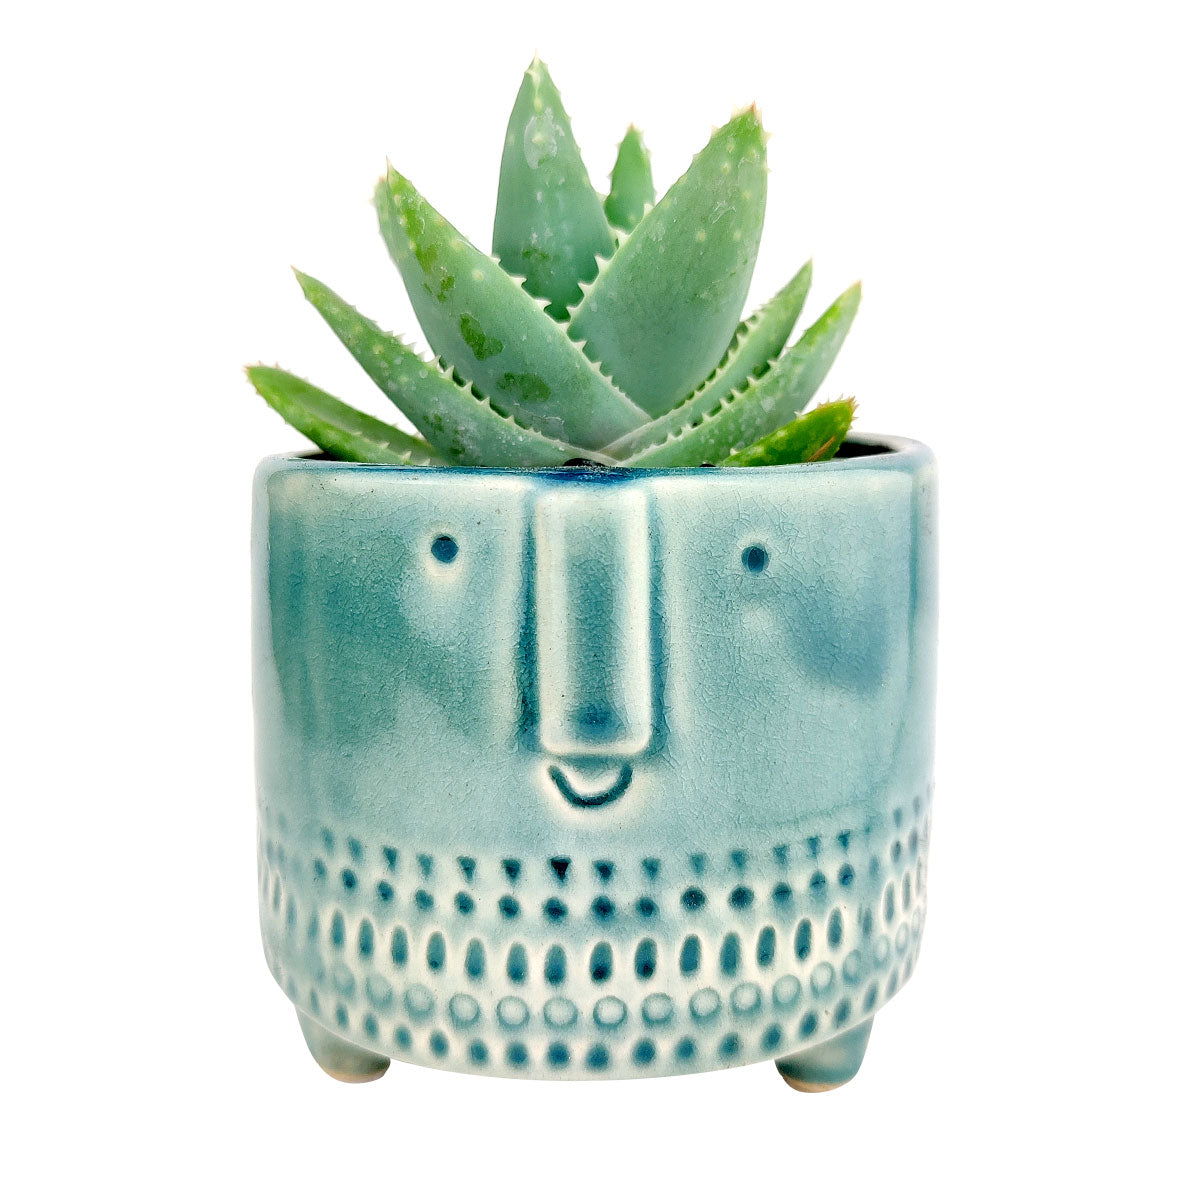 Crackled Glazed Gray Pot for sale, Minimalism Design Ceramic Pots for succulent plant, Medium ceramic succulent pot, Home decor Office decor, Round ceramic pot, Face ceramic pot for sale